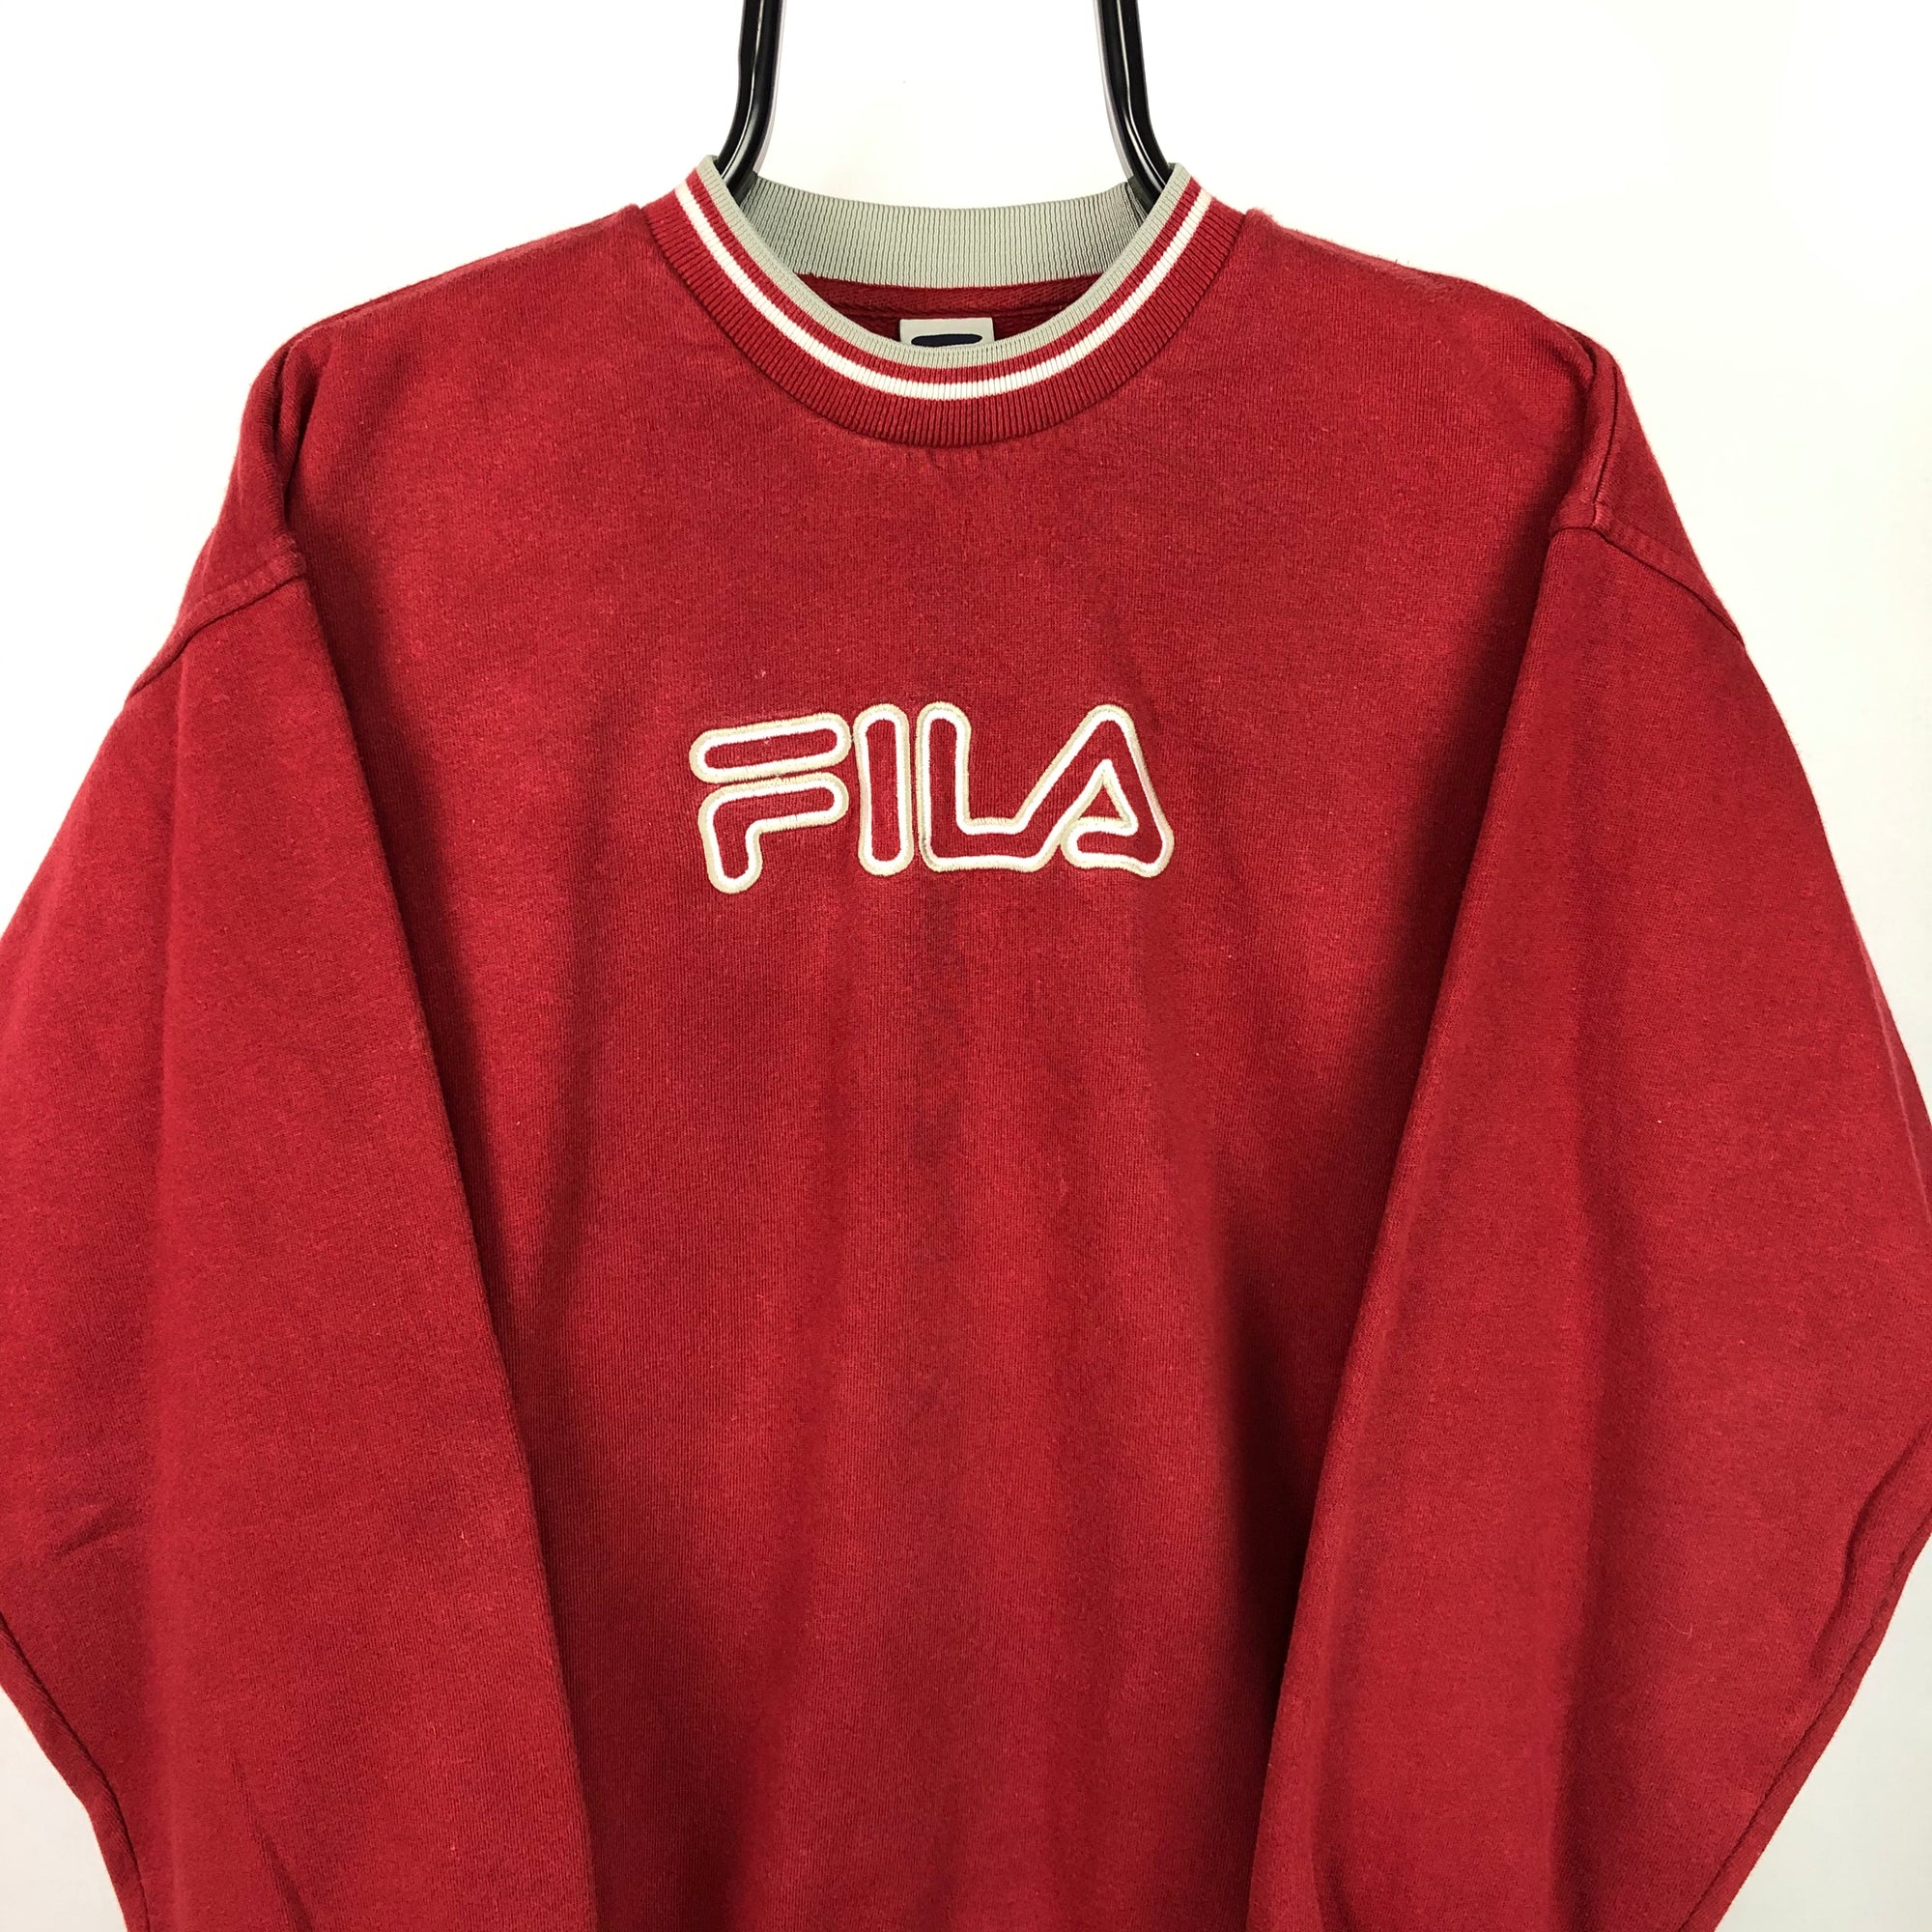 Vintage Fila Spellout Sweatshirt in Deep Red - Men's Small/Women's Medium